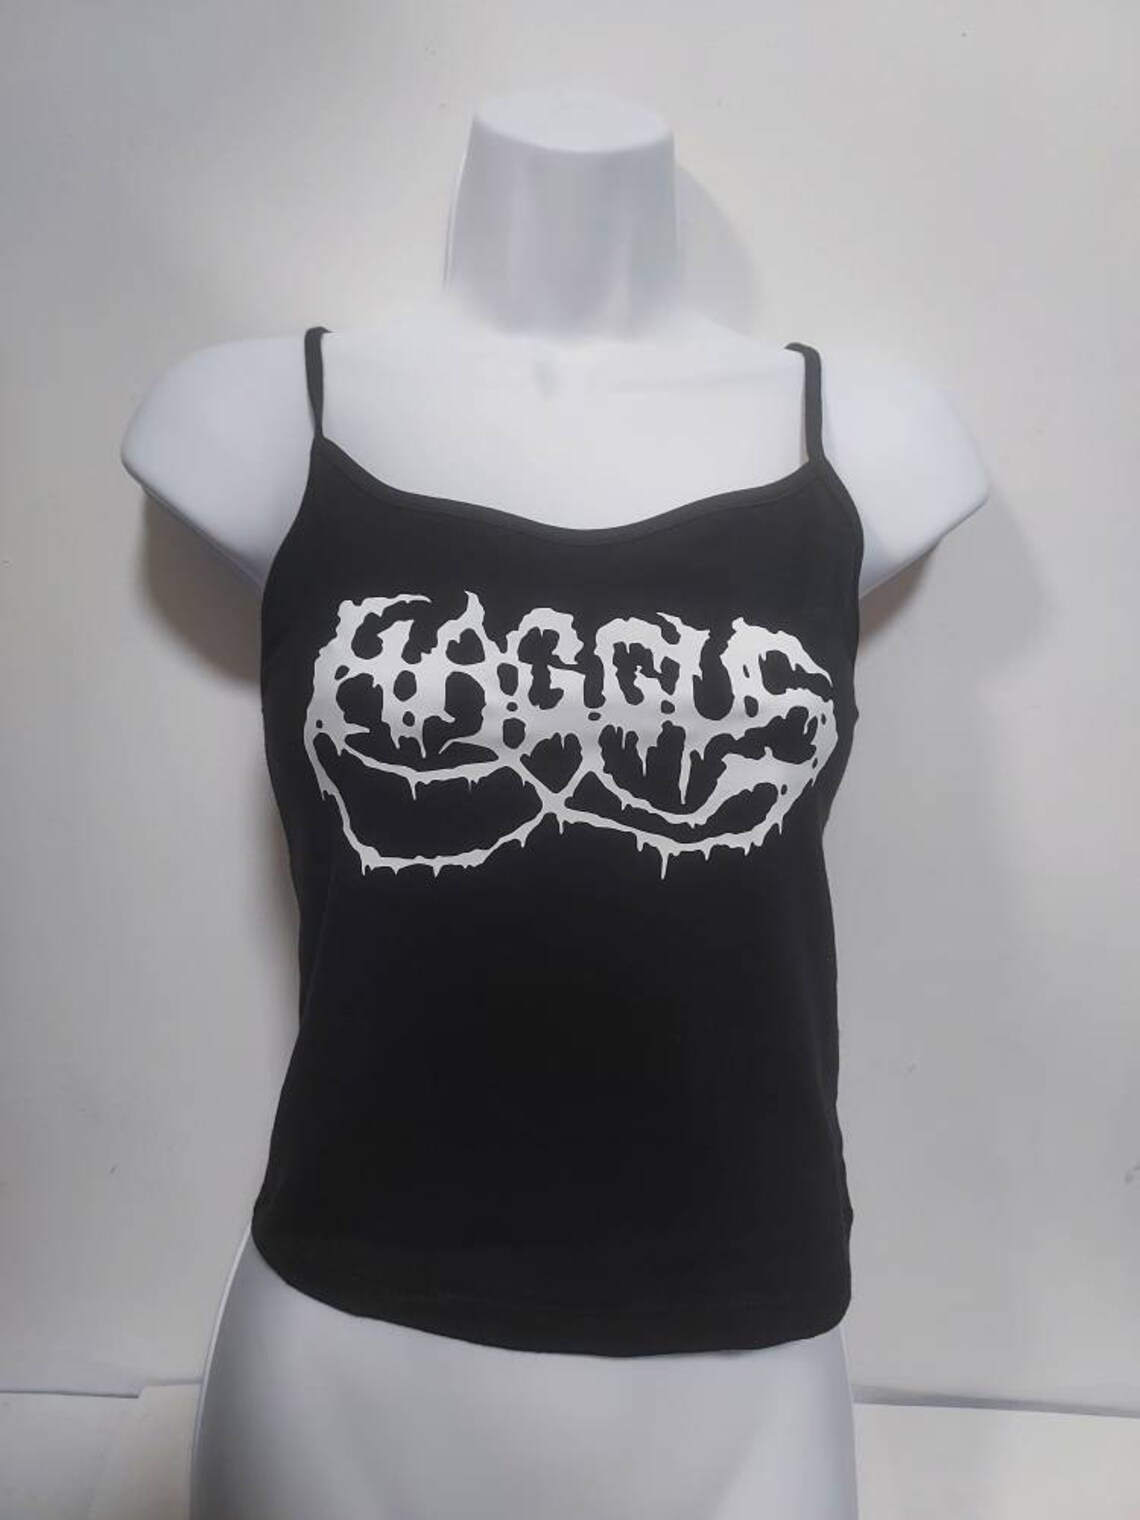 Haggus Crop Top Haggus Shirt Haggus Tank Top - Etsy